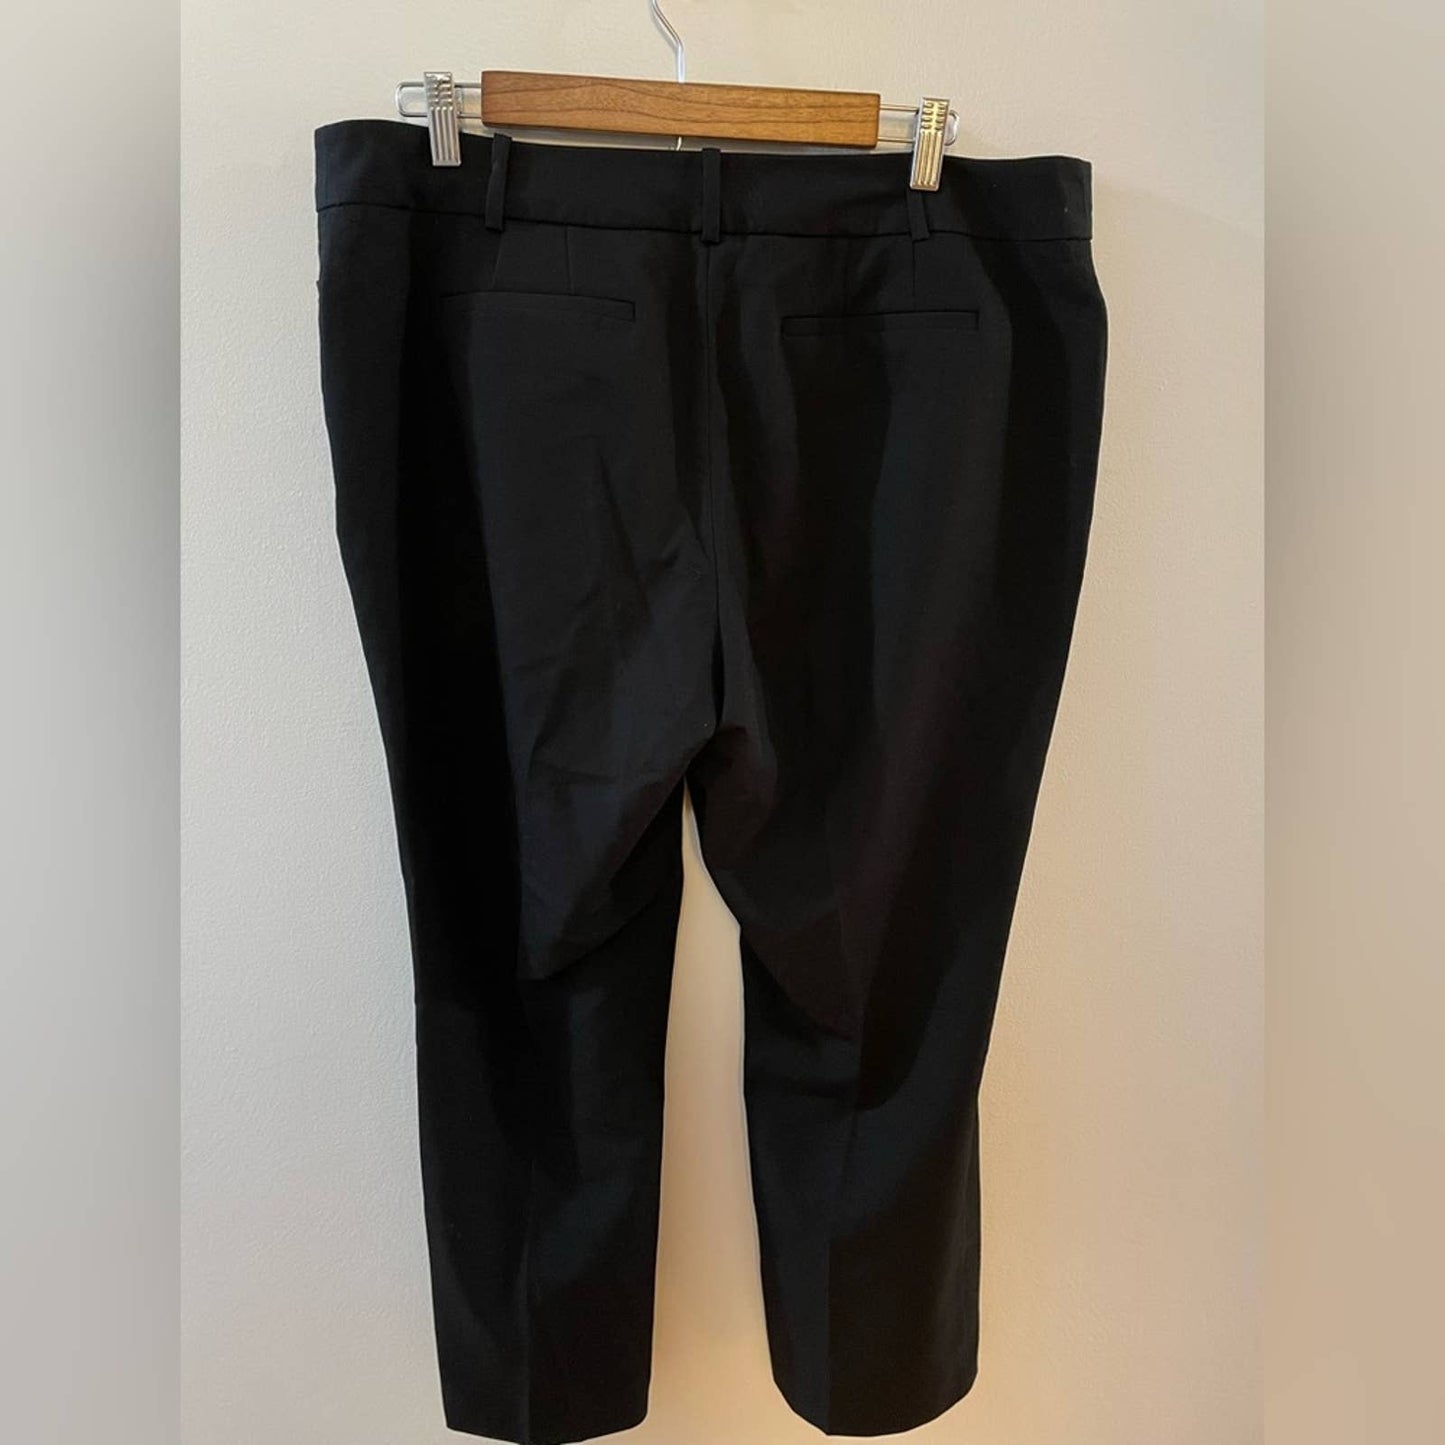 Size 14P Short Worthington Black Trousers